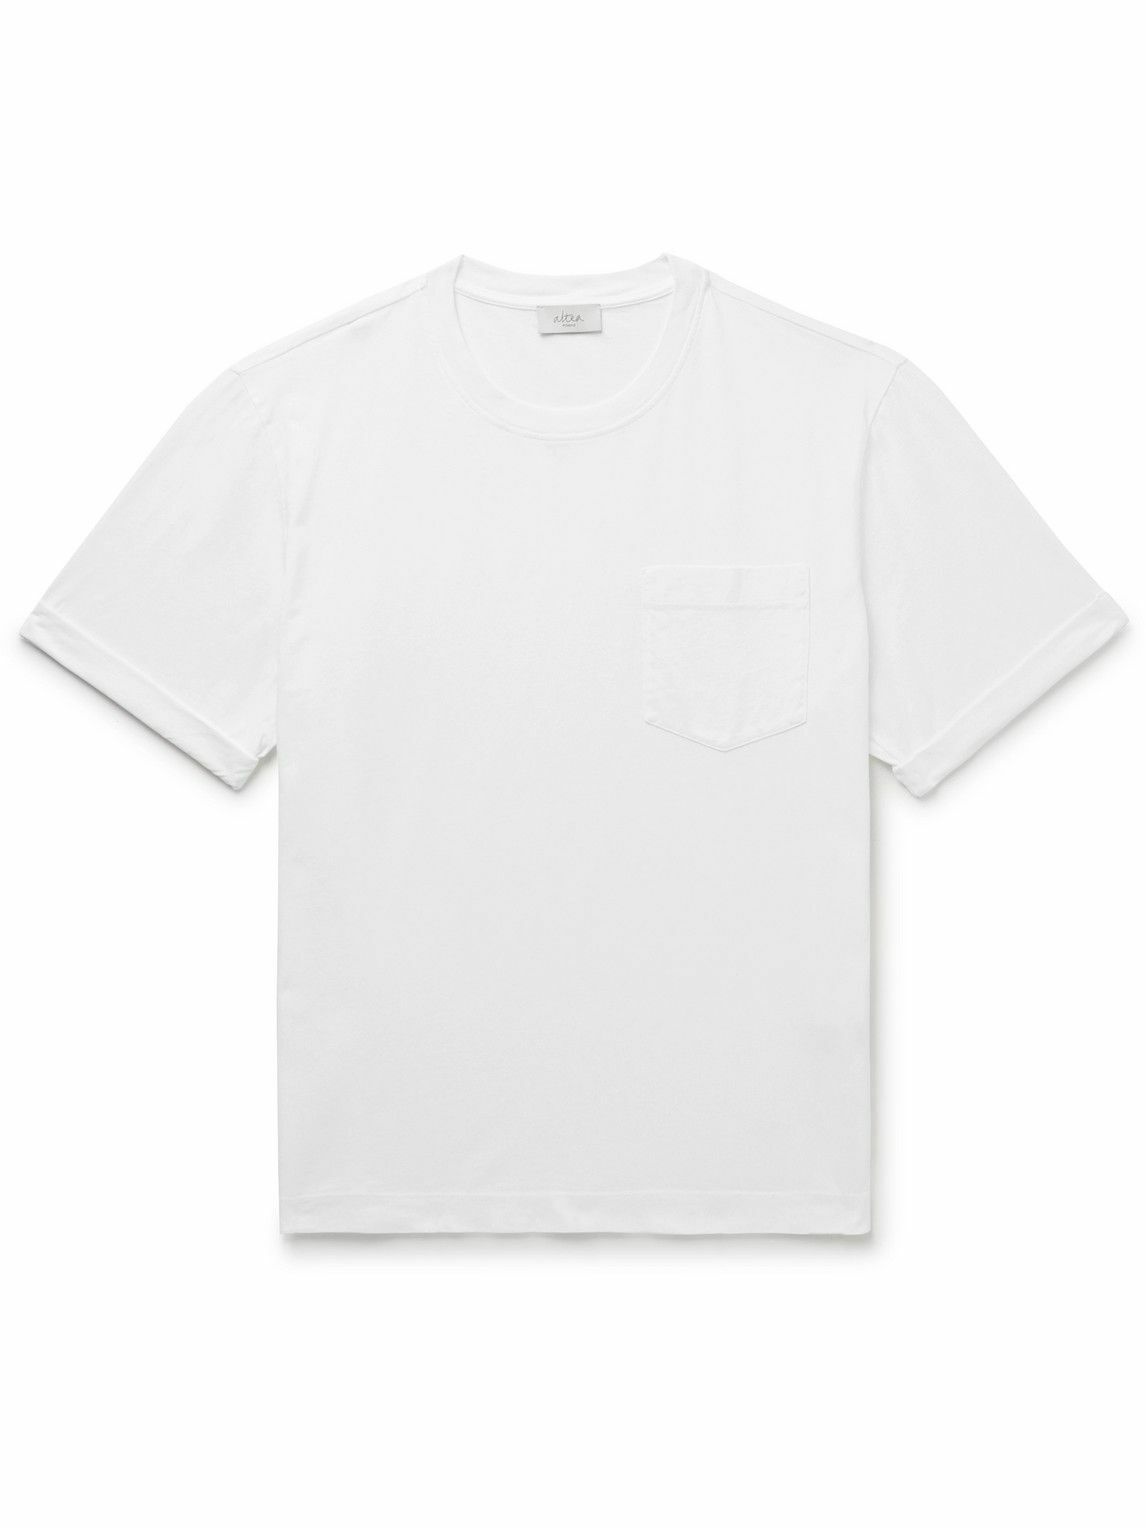 Altea - Cotton-Jersey T-Shirt - White Altea